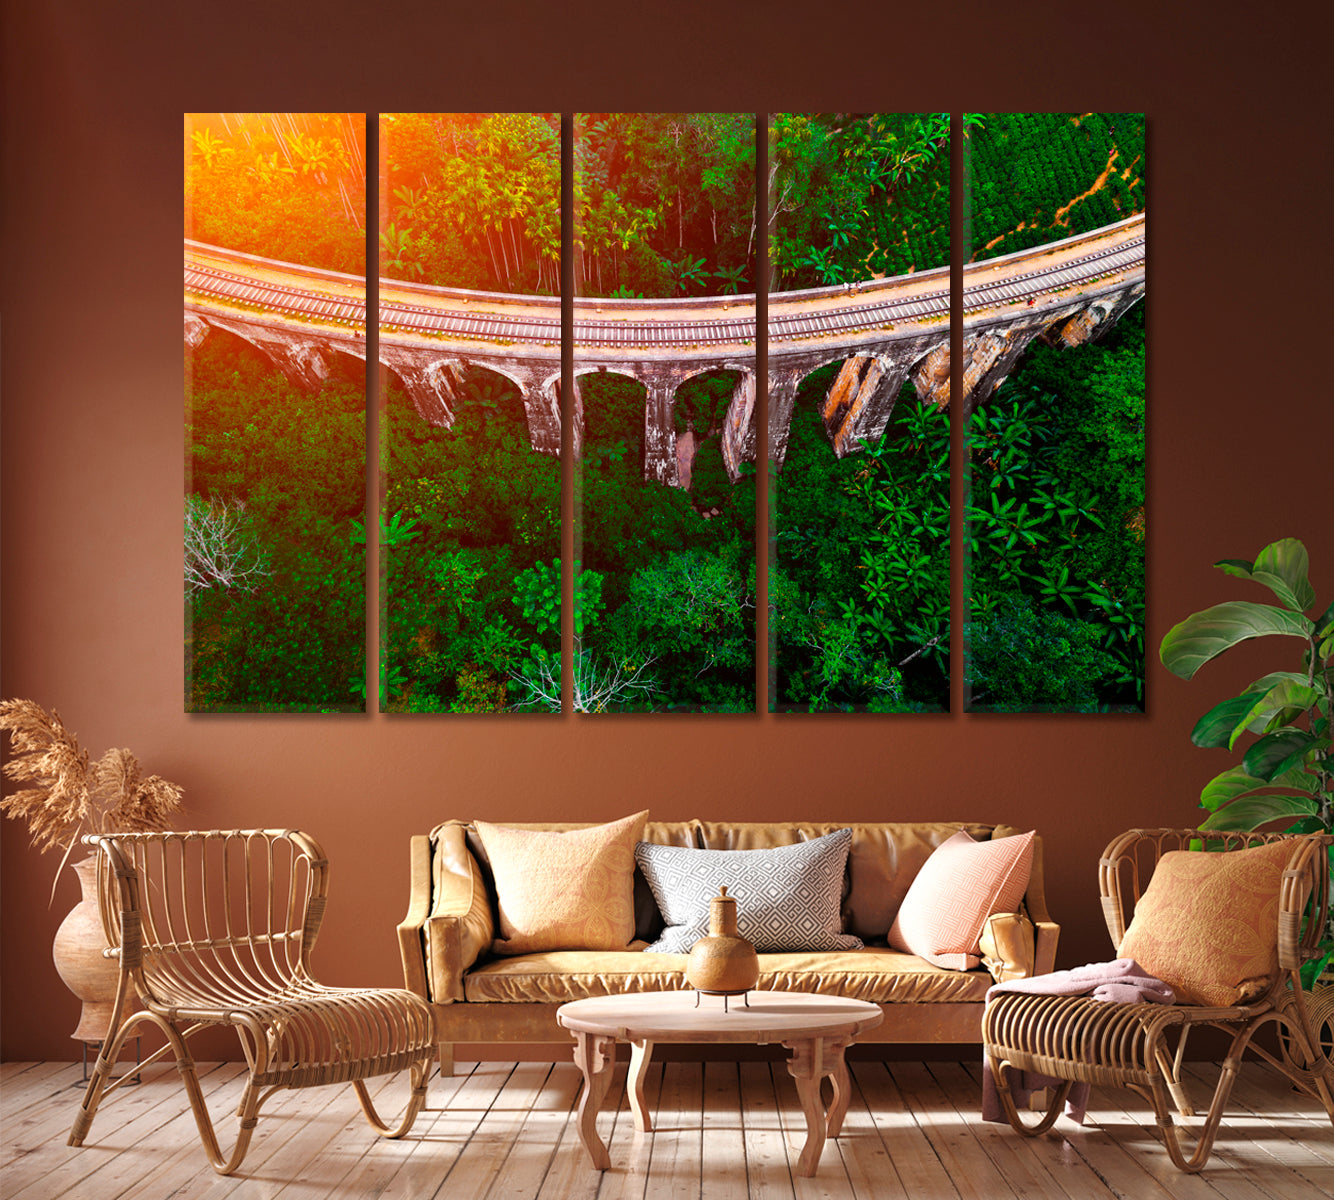 Nine Arches Bridge in Ella Sri Lanka Canvas Print ArtLexy 5 Panels 36"x24" inches 